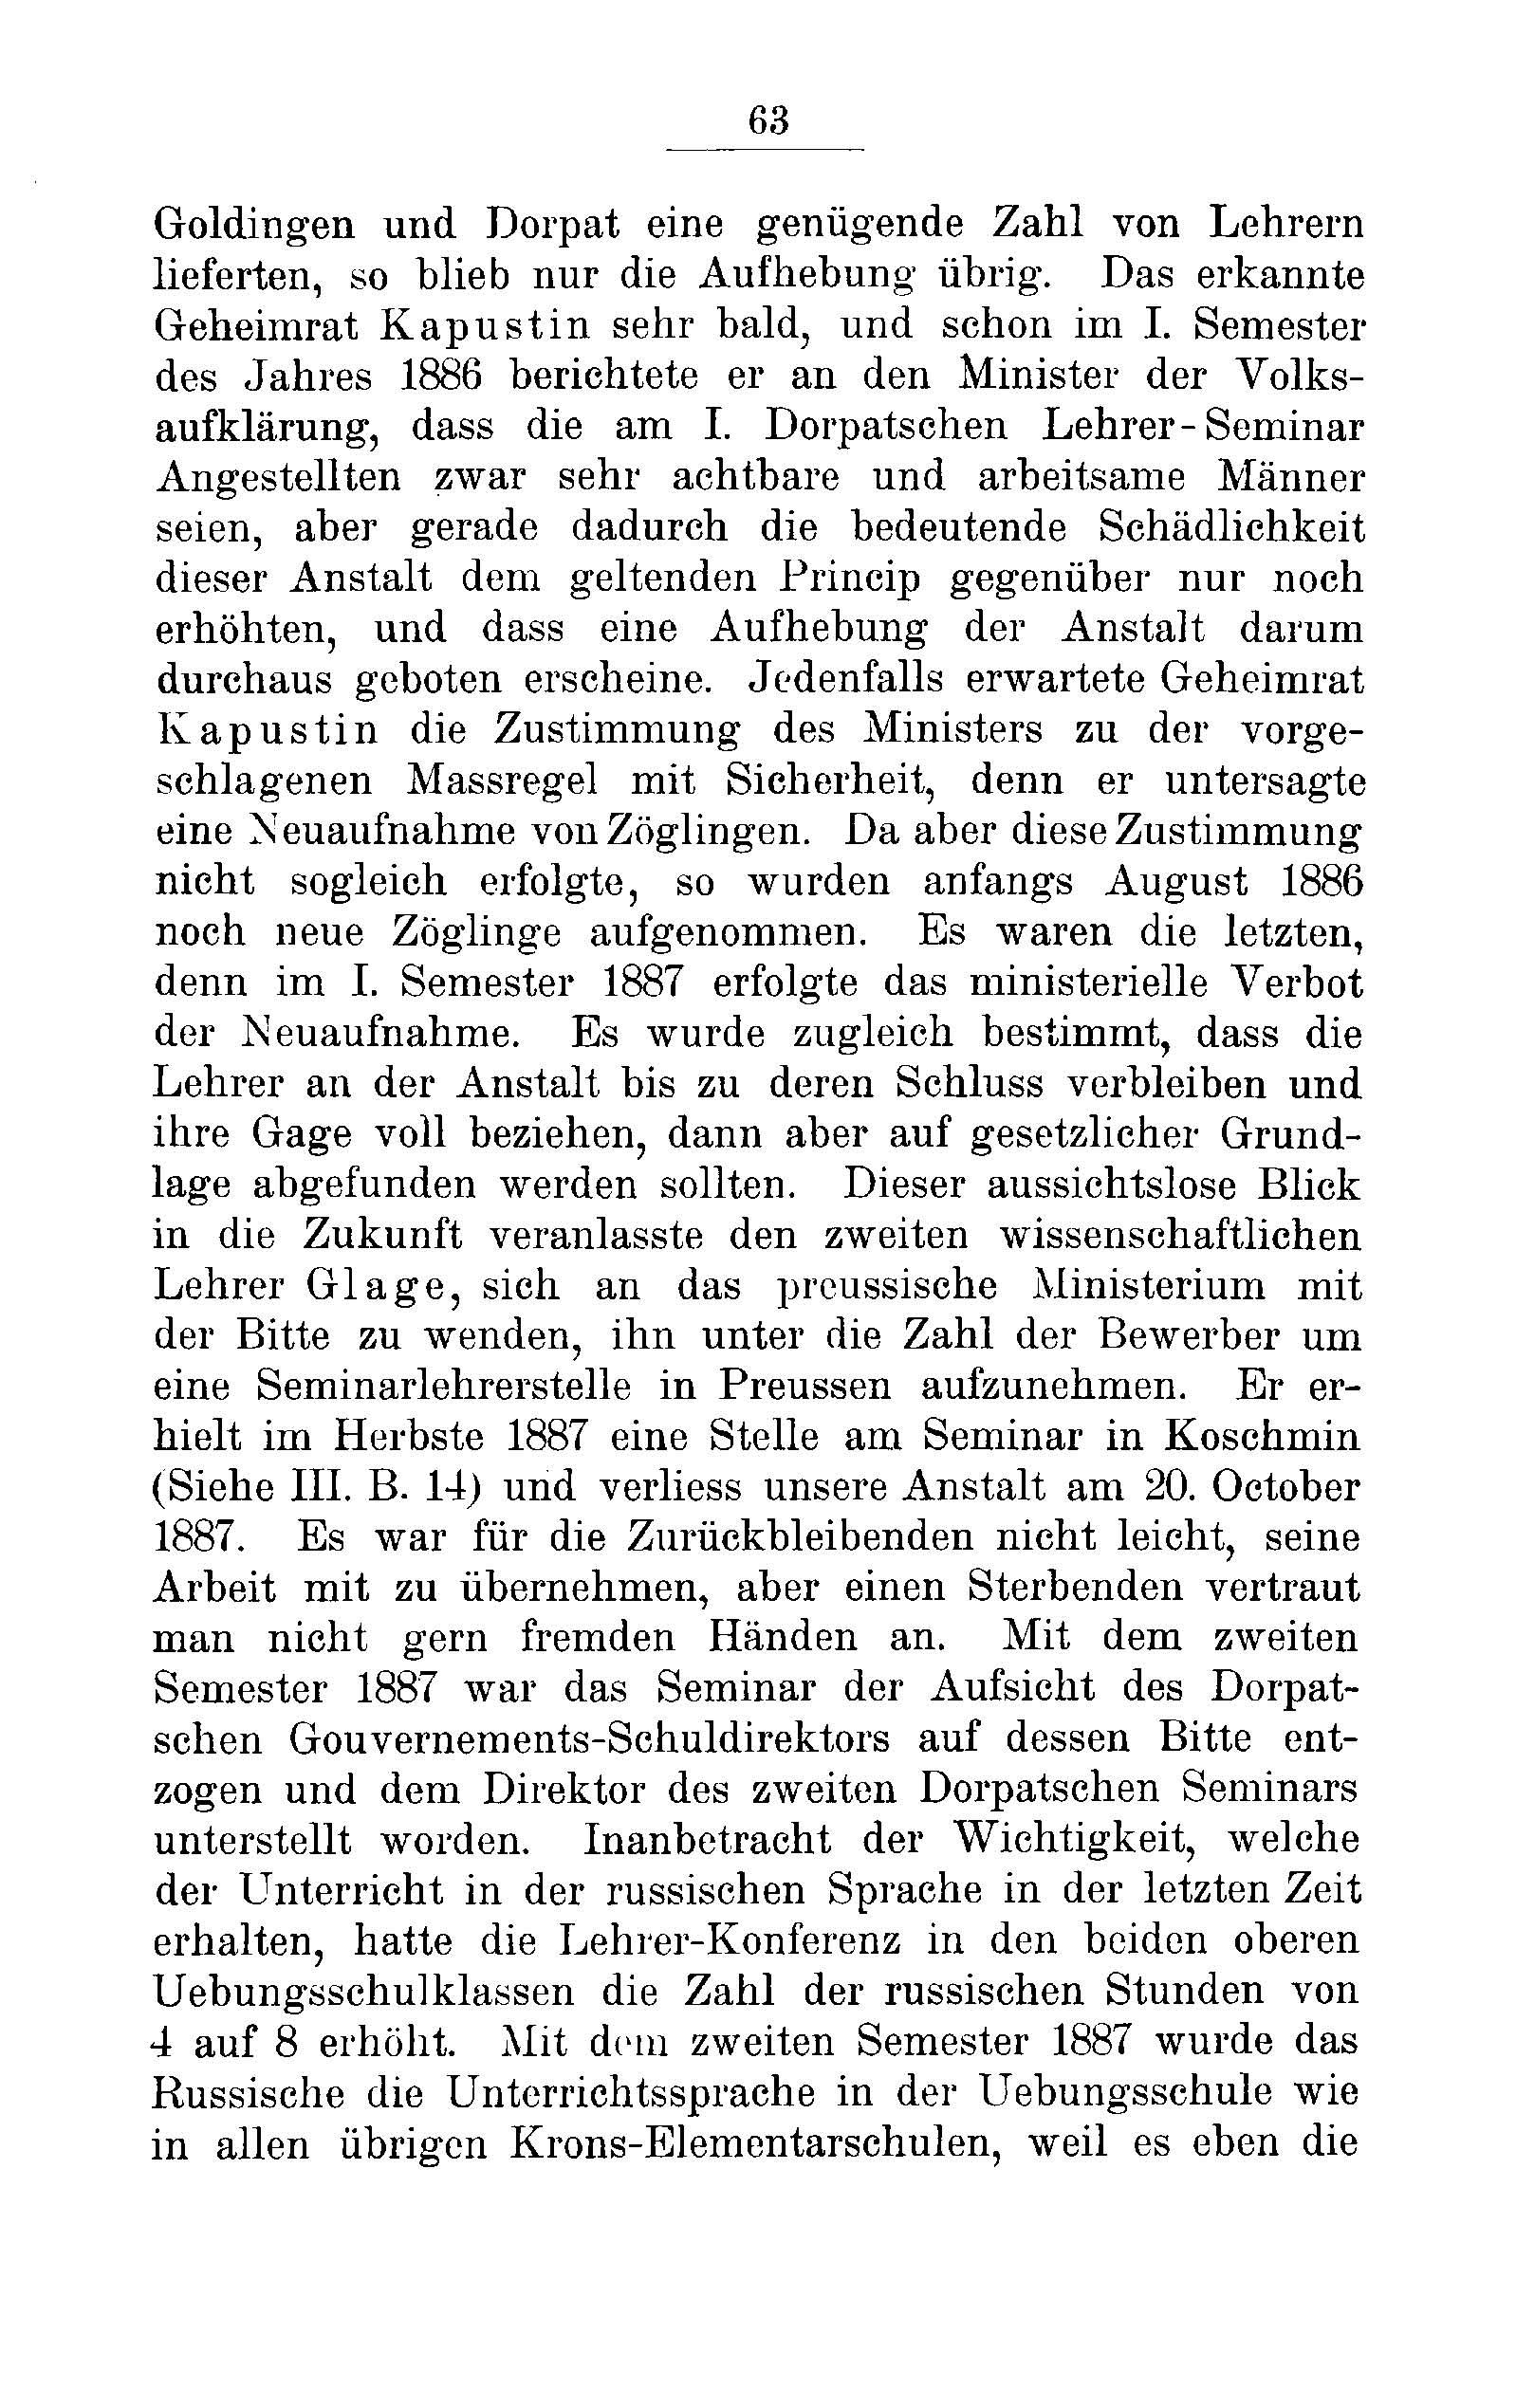 Das Erste Dorpatsche Lehrer-Seminar (1890) | 66. Основной текст